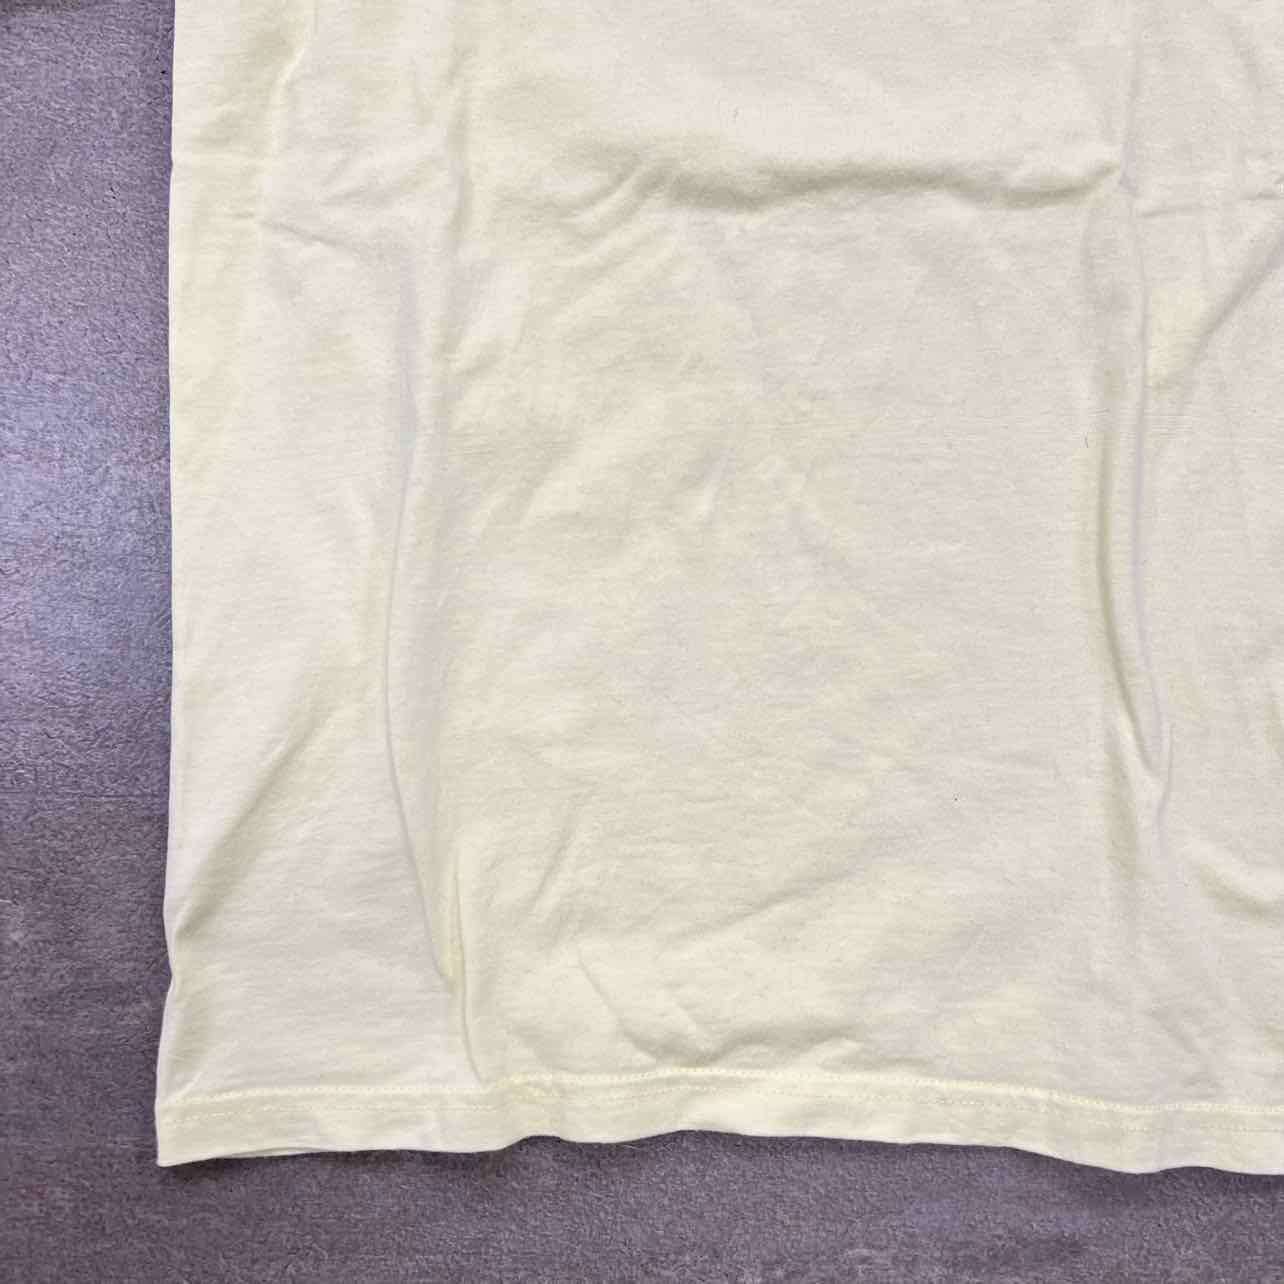 Supreme T-Shirt &quot;BOX LOGO KAWS&quot; Pale Yellow Used Size S